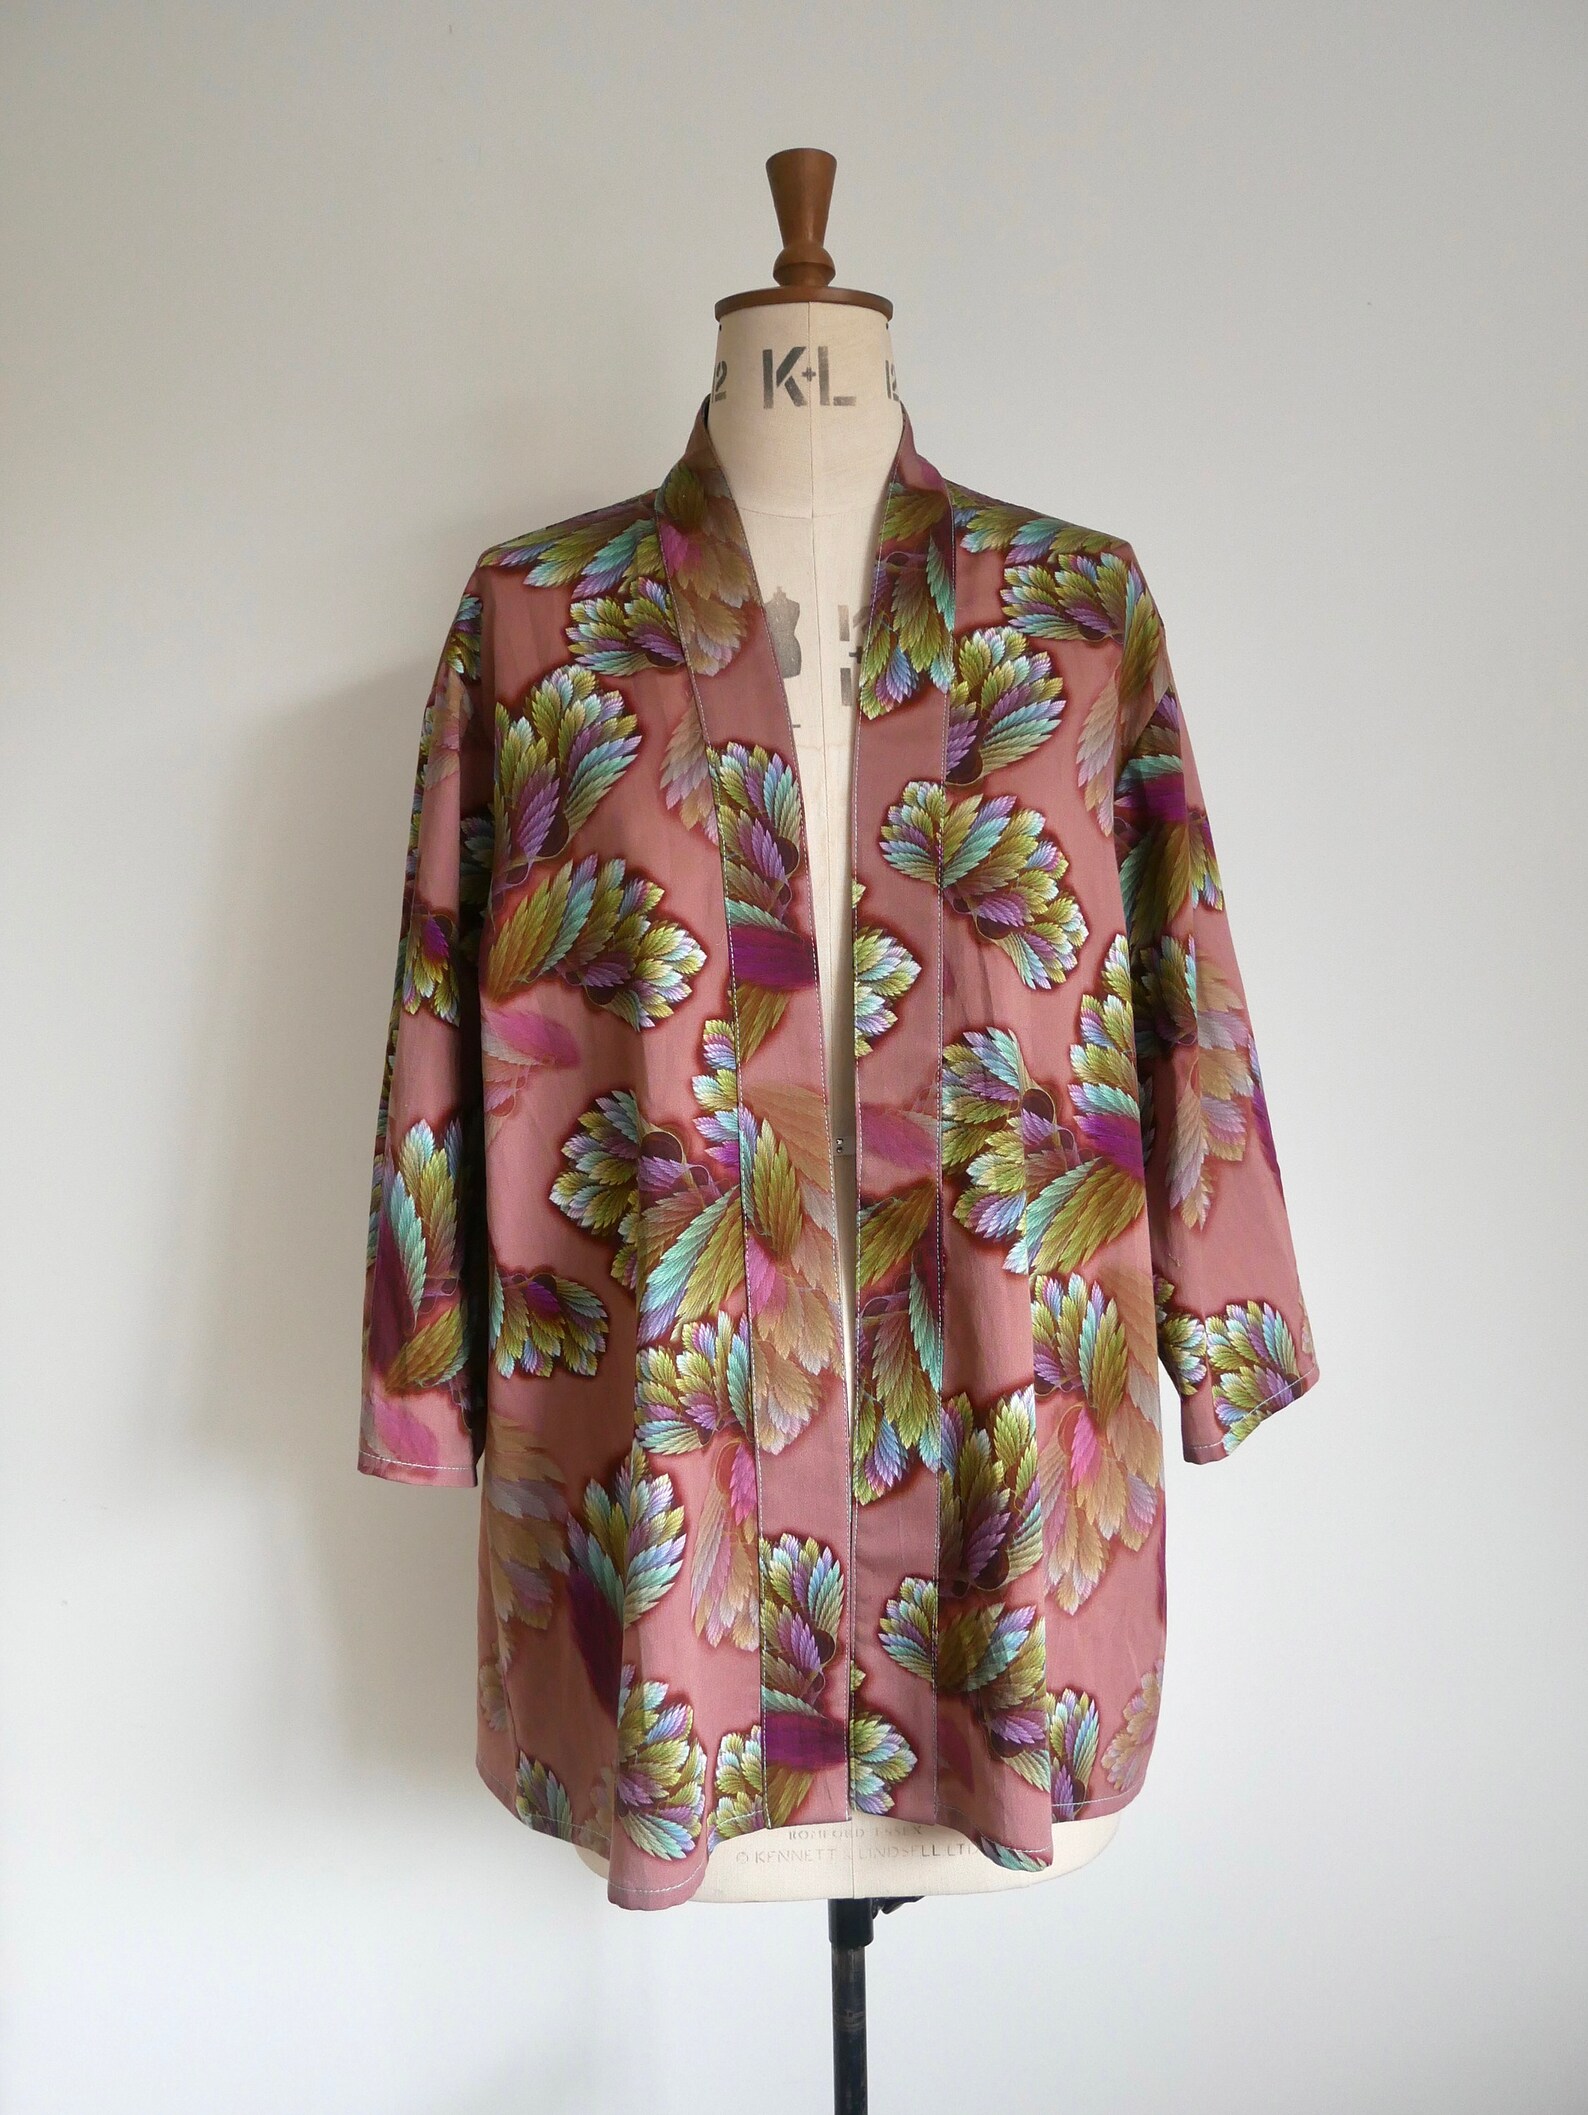 HANDMADE Kimono Jacket One Size fits all easy fitting | Etsy